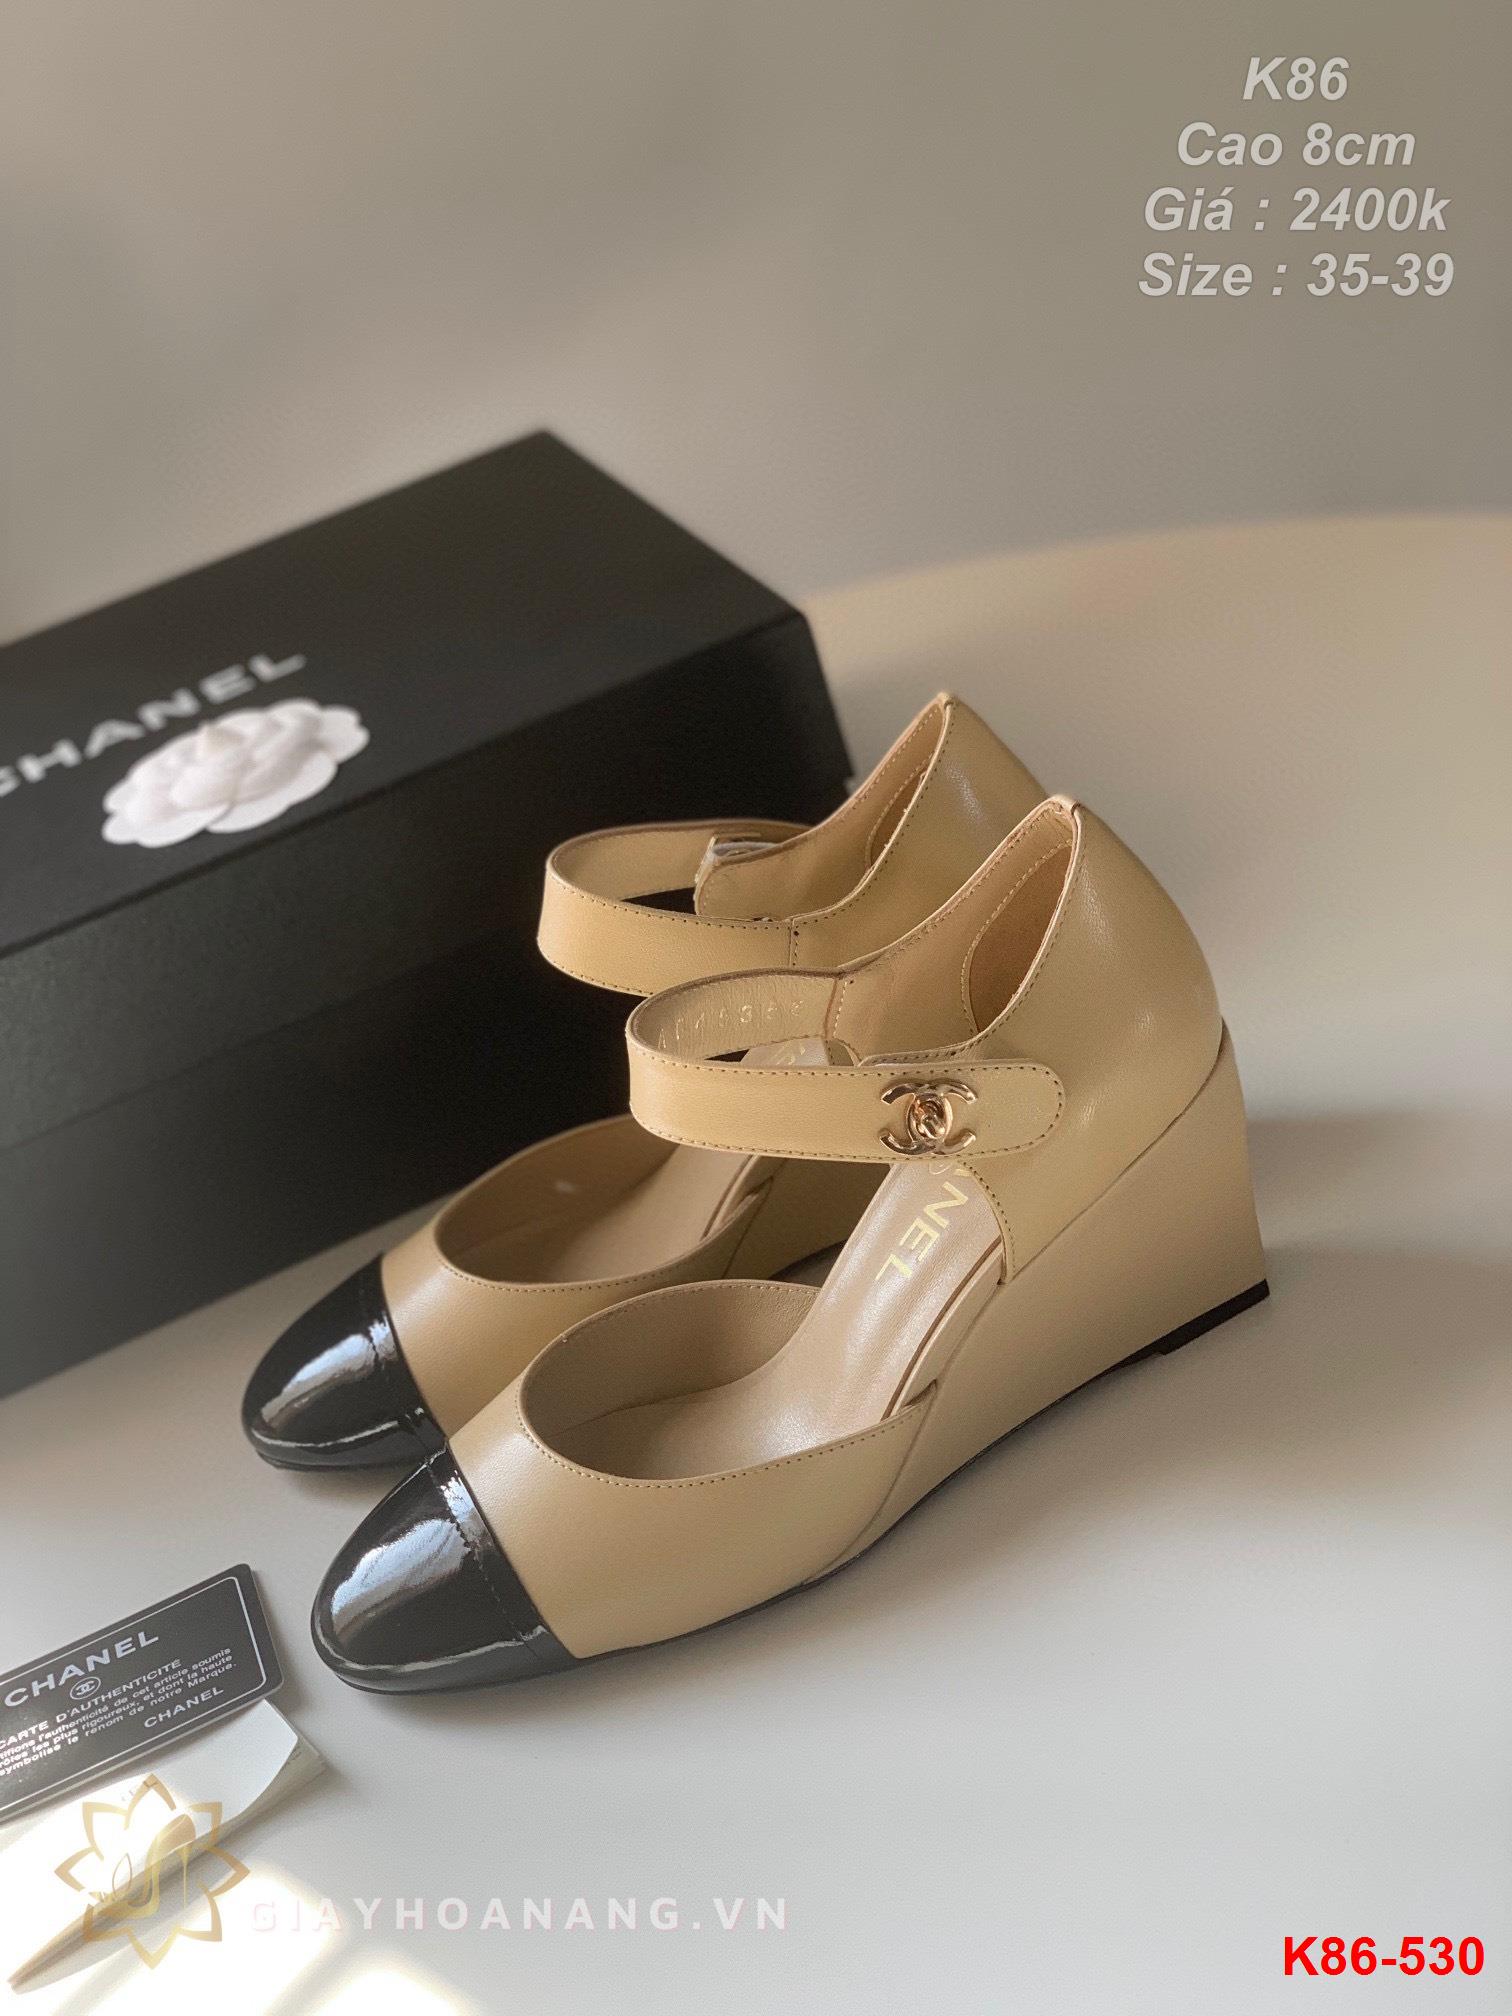 K86-530 Chanel sandal cao 8cm siêu cấp